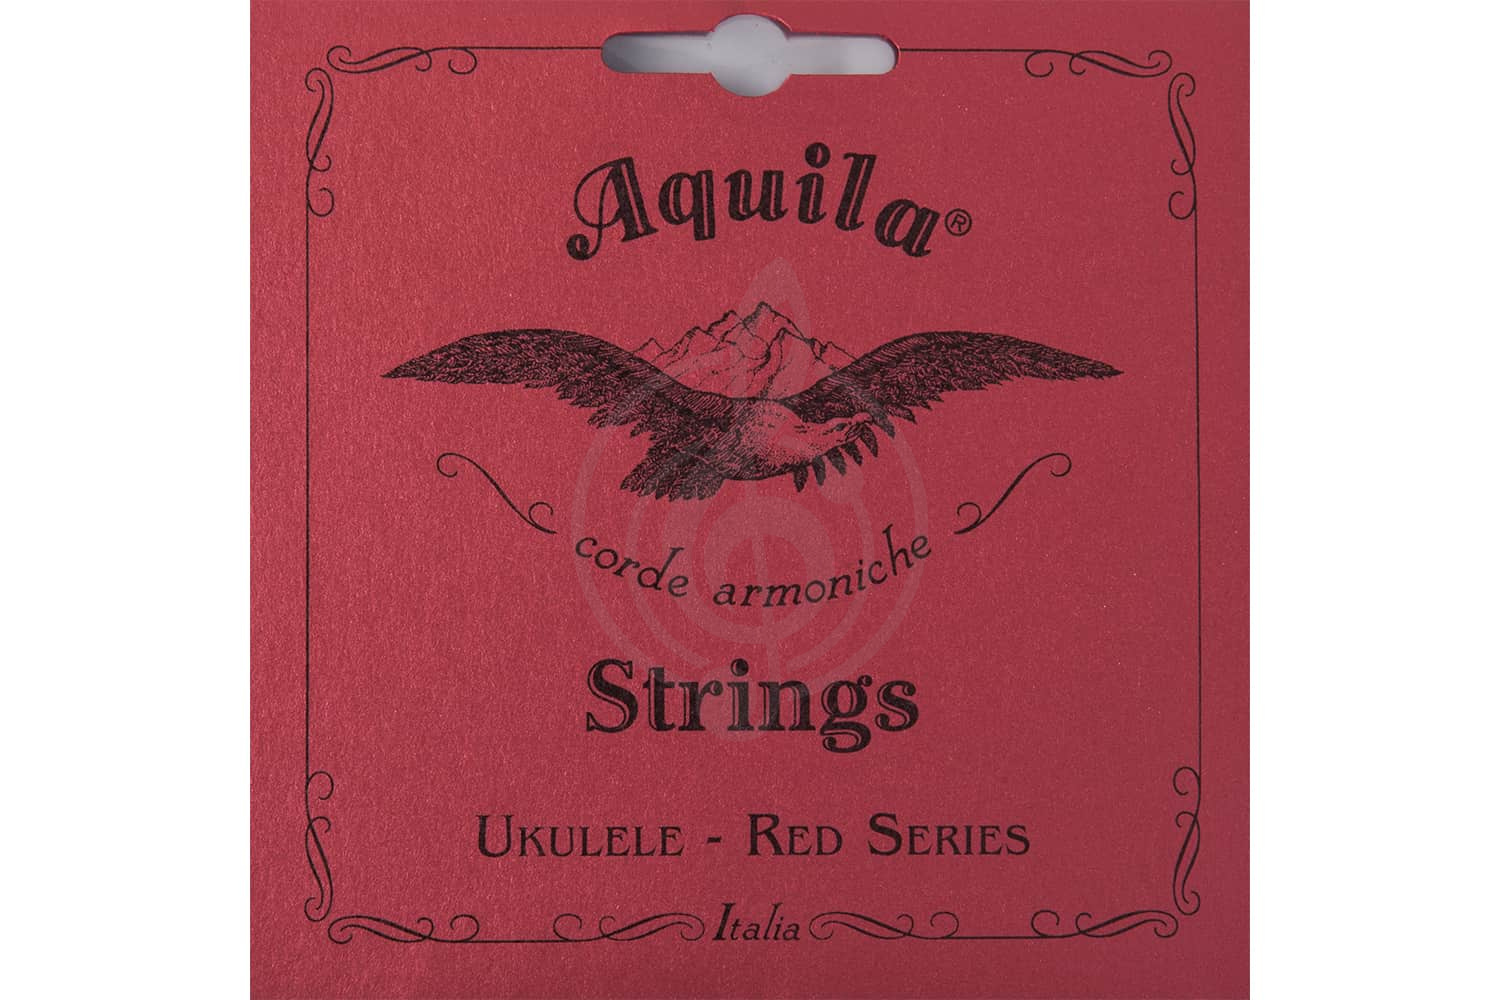 Струны для укулеле тенор Струны для укулеле тенор Aquila AQUILA RED SERIES 88U струны для укулеле тенор (Low G-C-E-A) 4U - фото 1